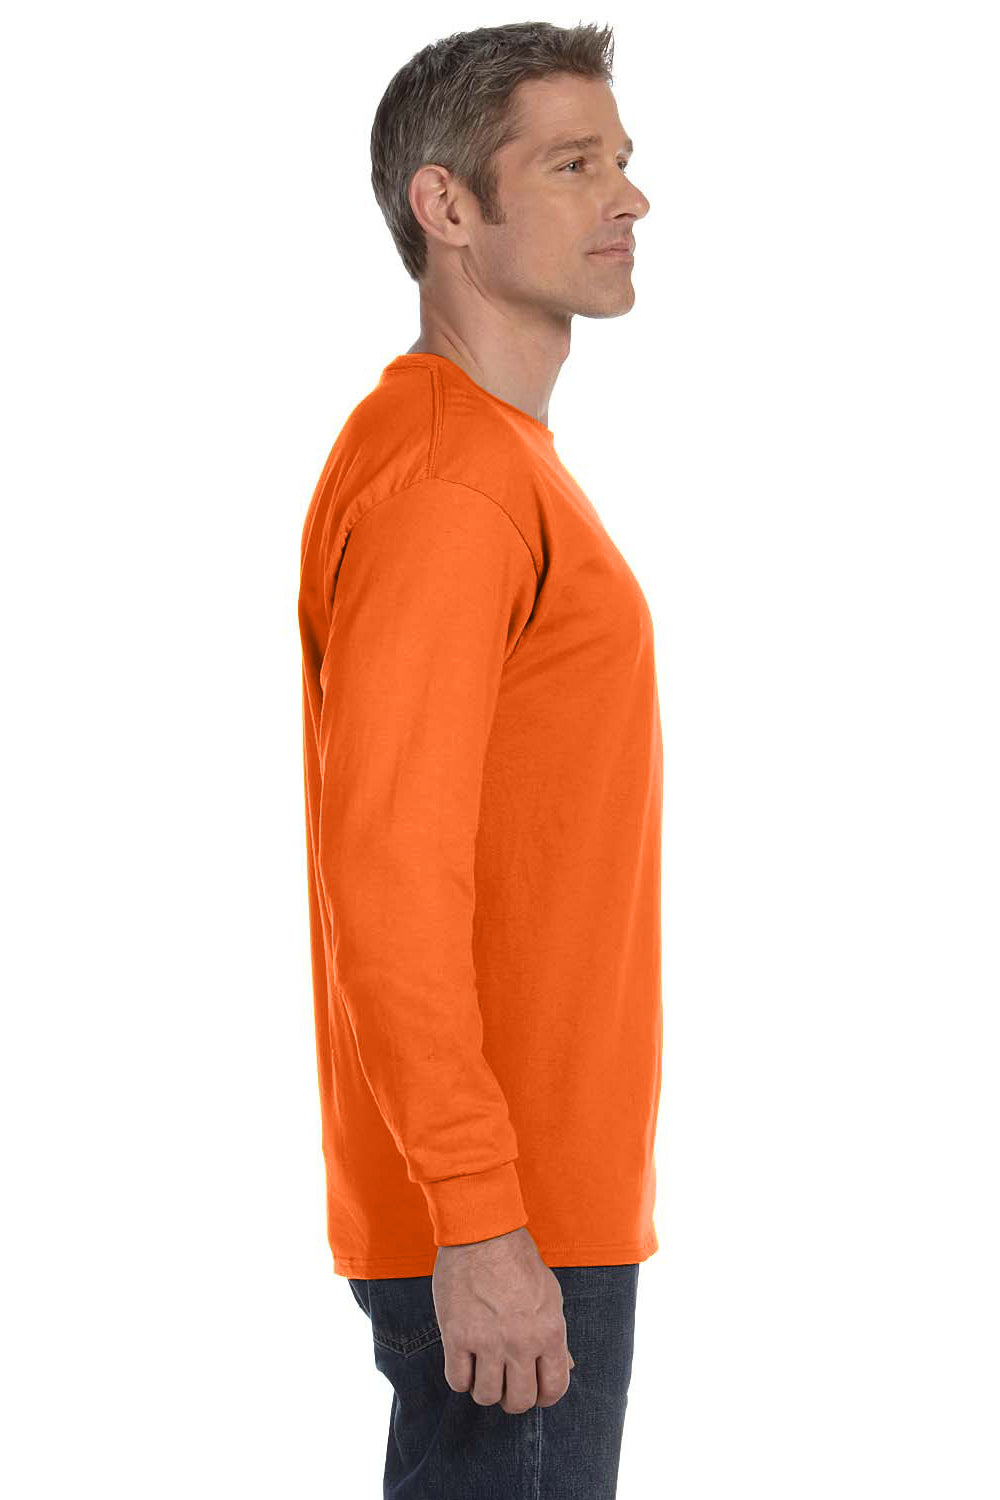 Gildan G540 Mens Long Sleeve Crewneck T-Shirt Safety Orange Side